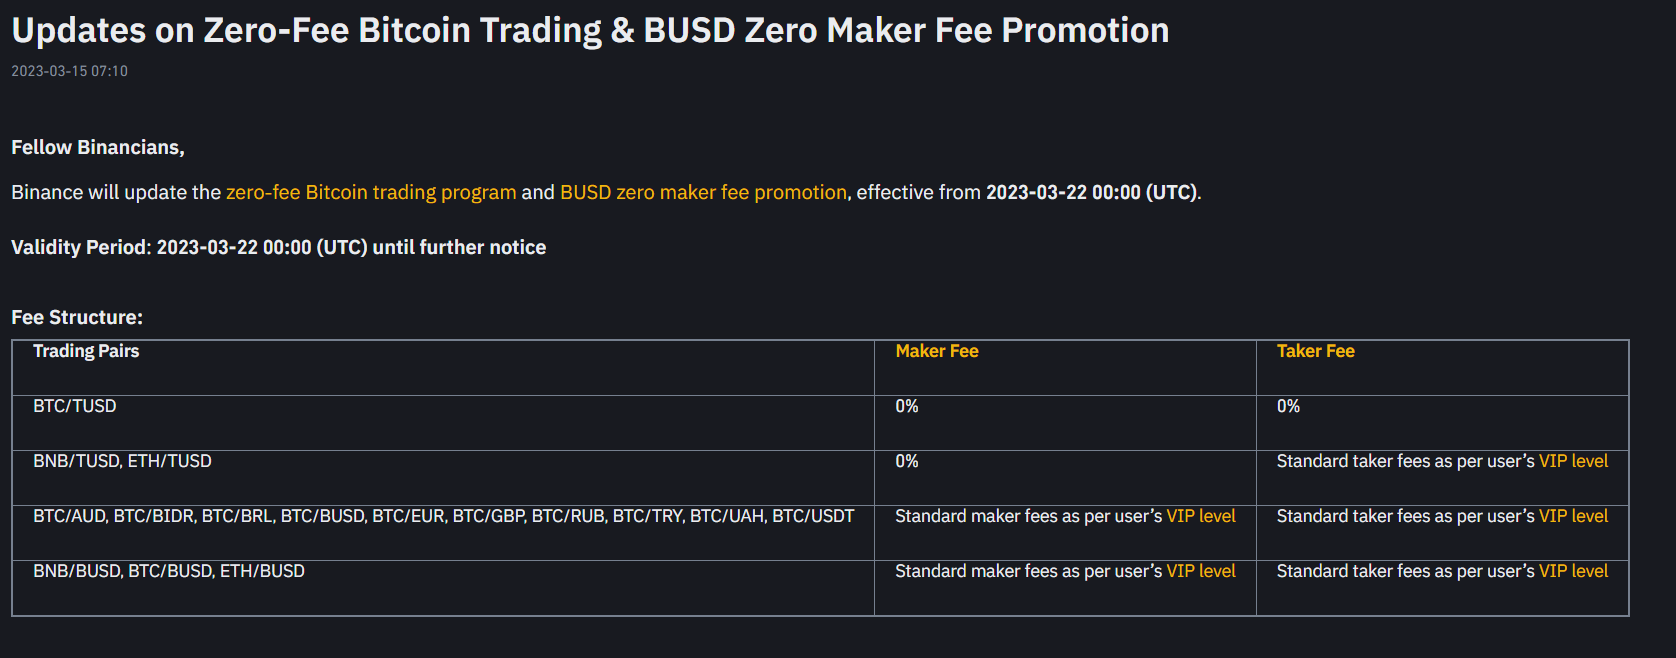 Binance offers 0% fee on BTC/TUSD trading